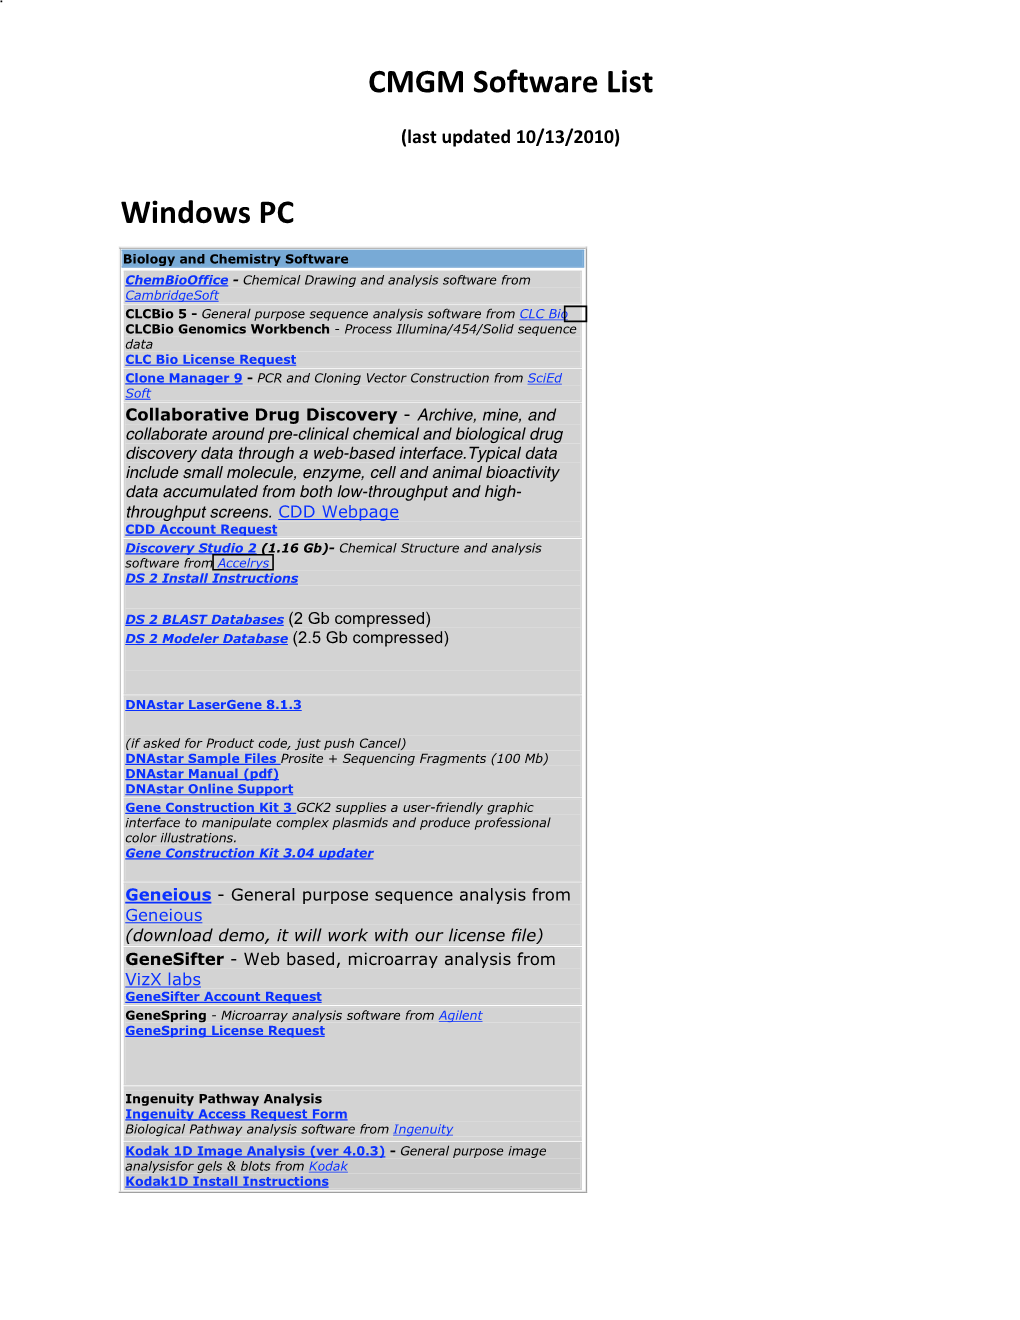 CMGM Software List Windows PC